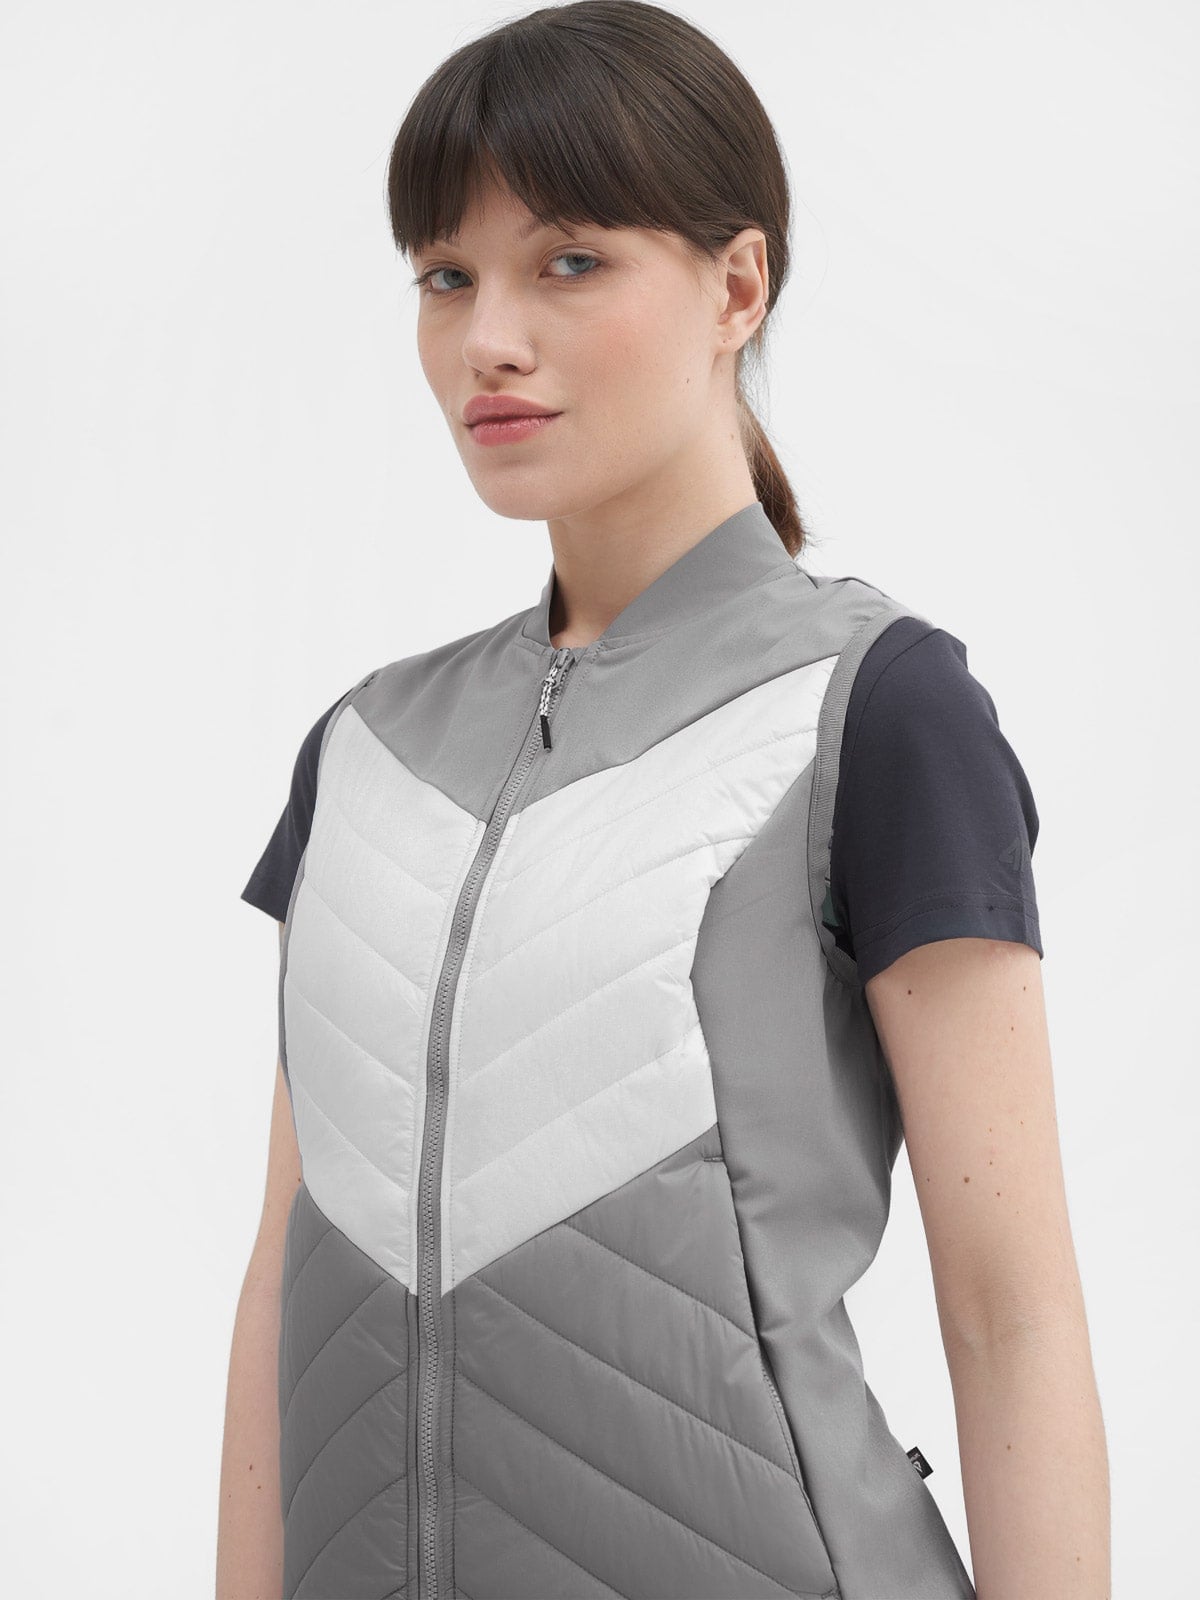 Dámska trekingová zatepľovacia vesta s výplňou PrimaLoft® Black Insulation Eco